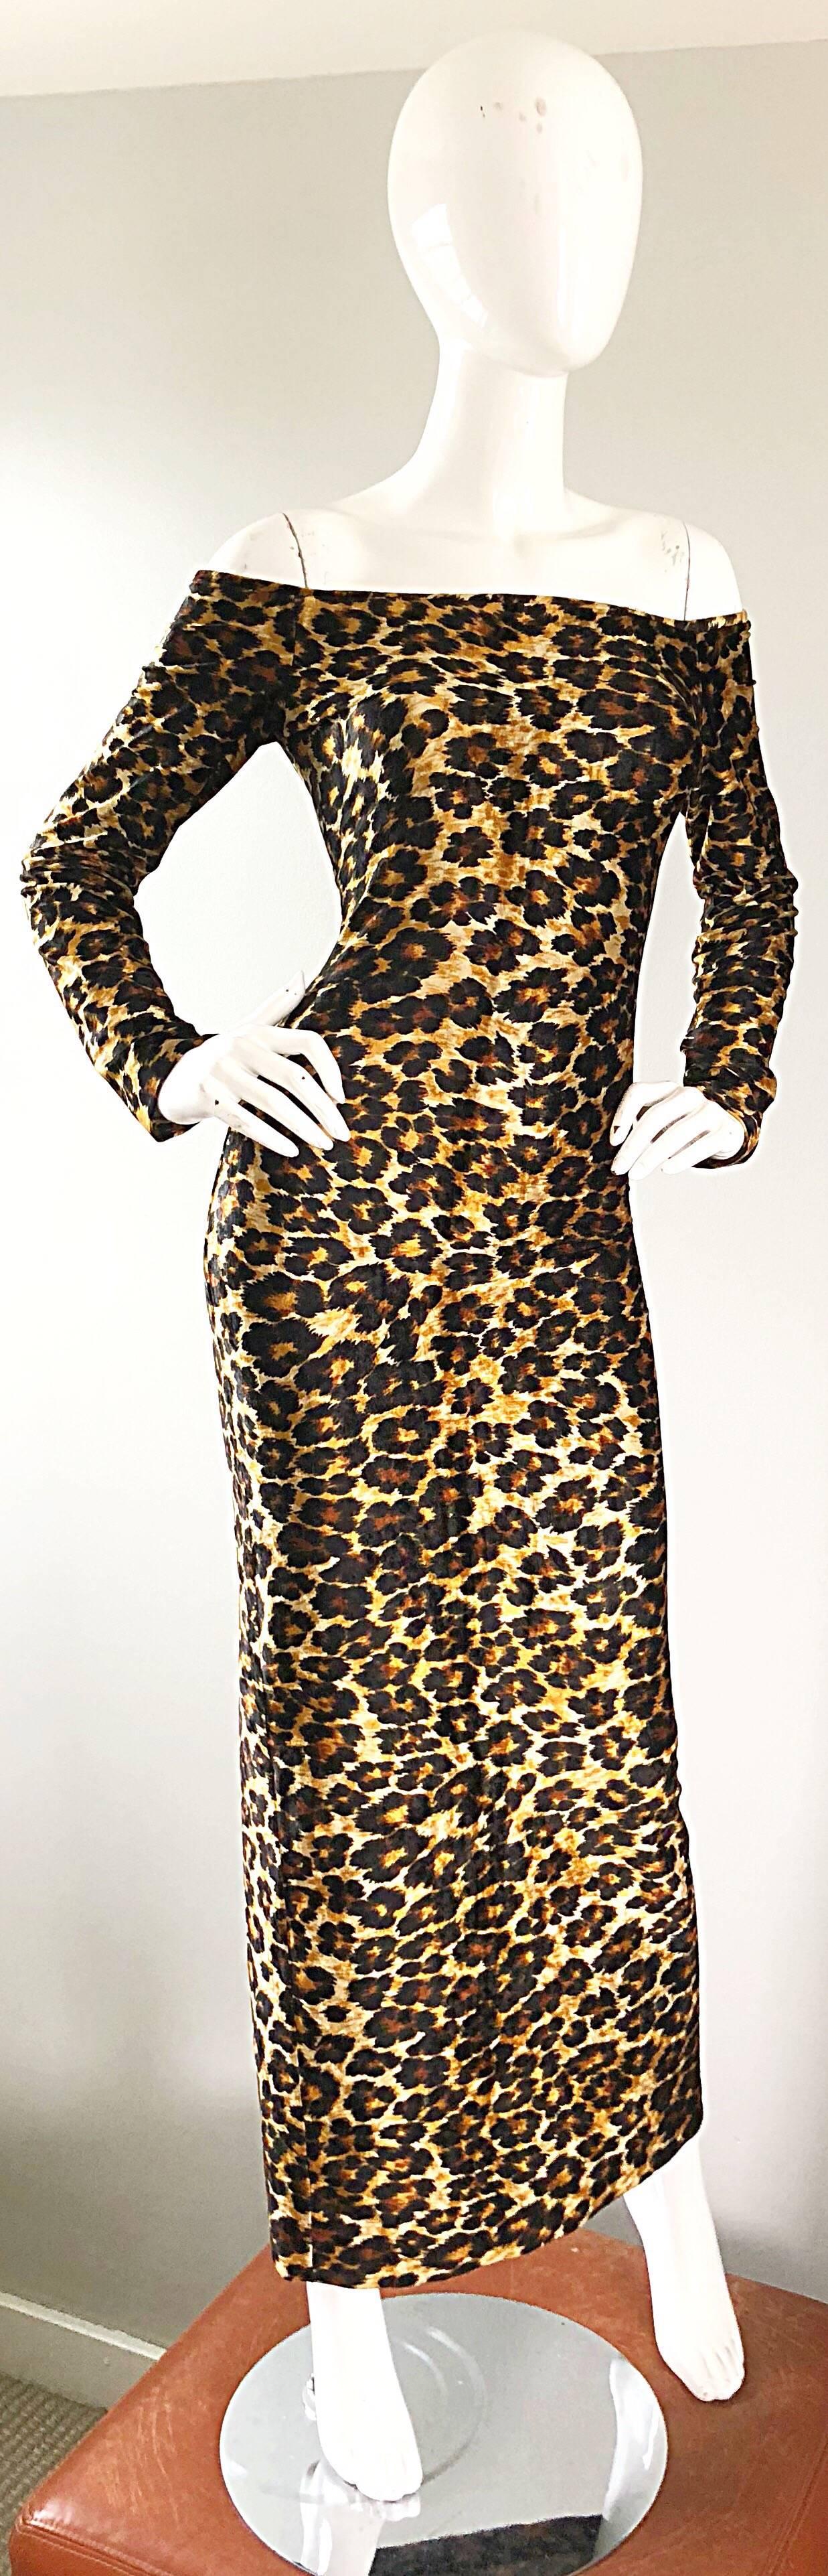 80s cheetah print outfit